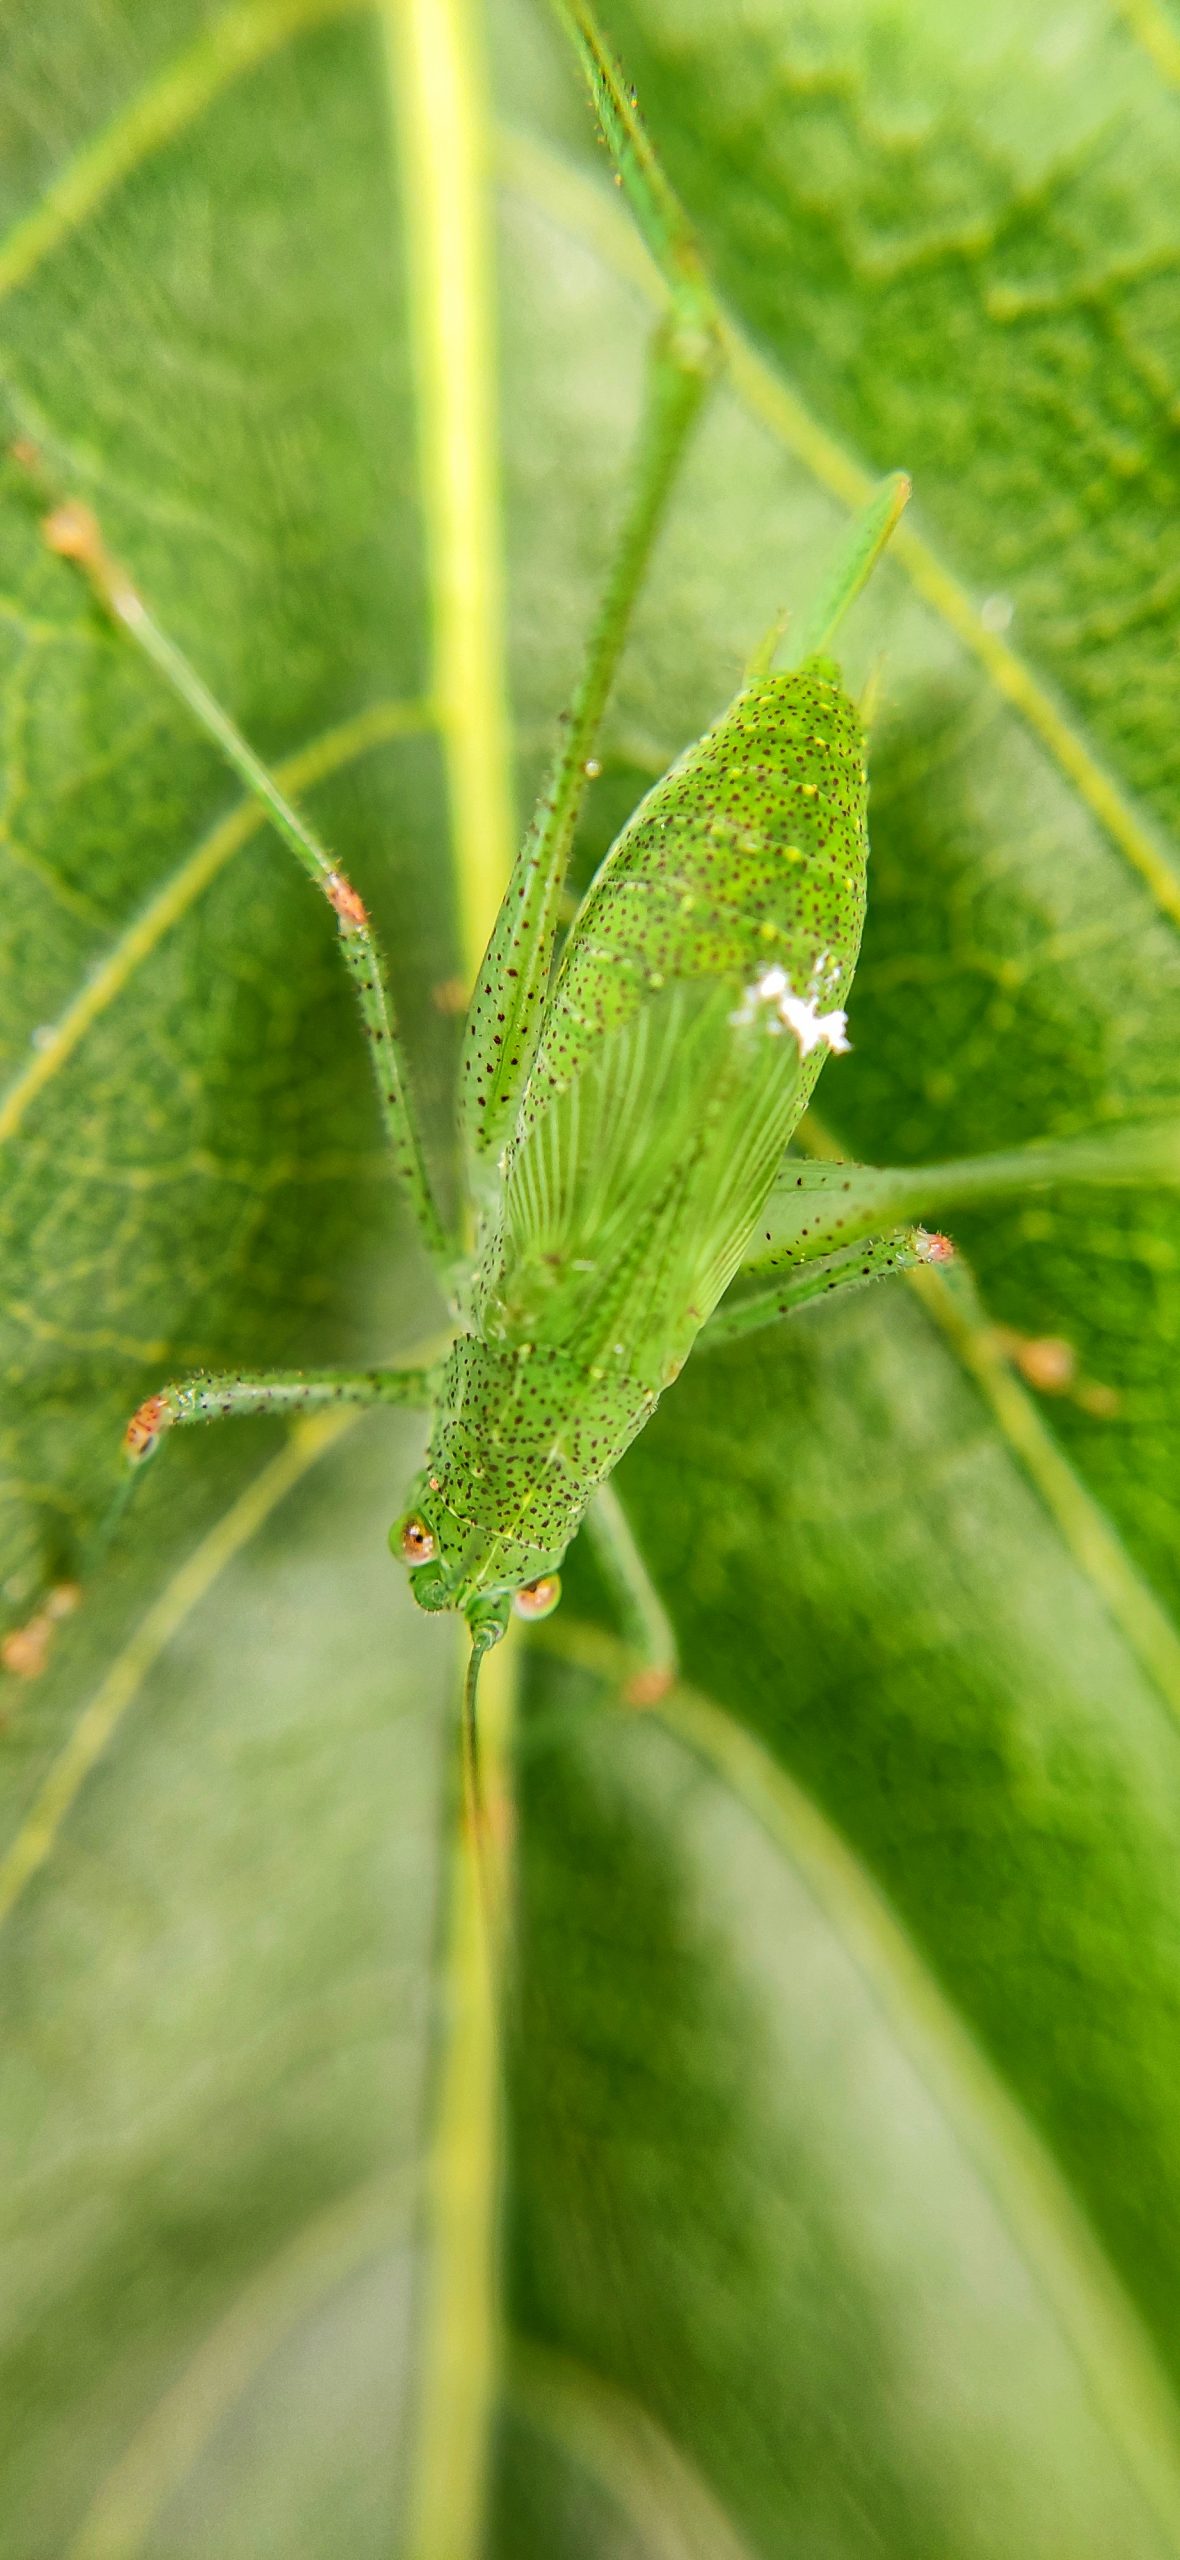 Grasshopper on plant